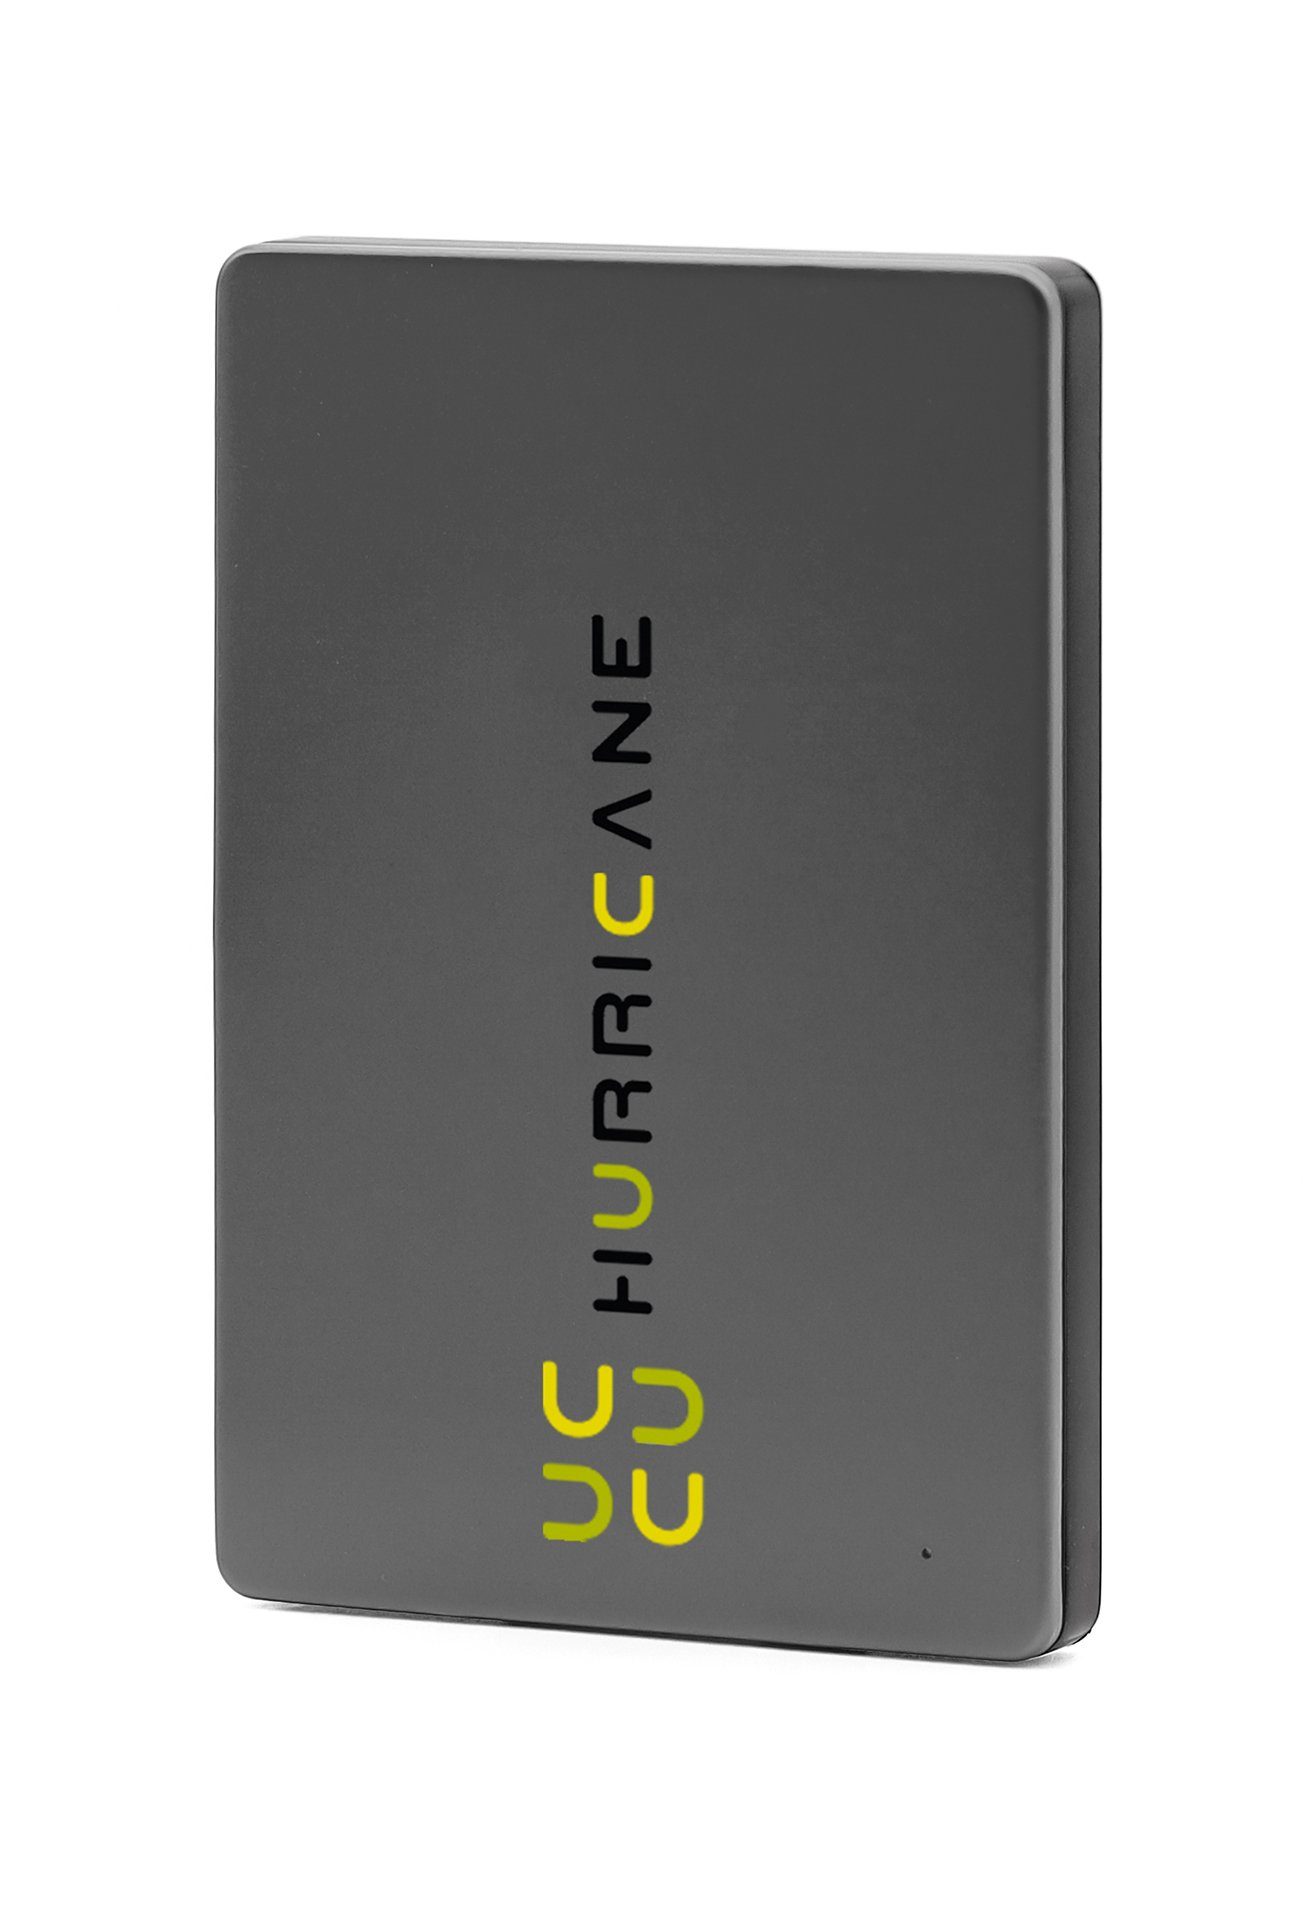 HURRICANE MD25U3 Tragbare Externe Festplatte 320GB 2,5" USB 3.0 externe  HDD-Festplatte (320GB) 2,5", für PC Laptop TV PS4 PS5 Xbox, kompatibel mit  Windows Mac und Linux